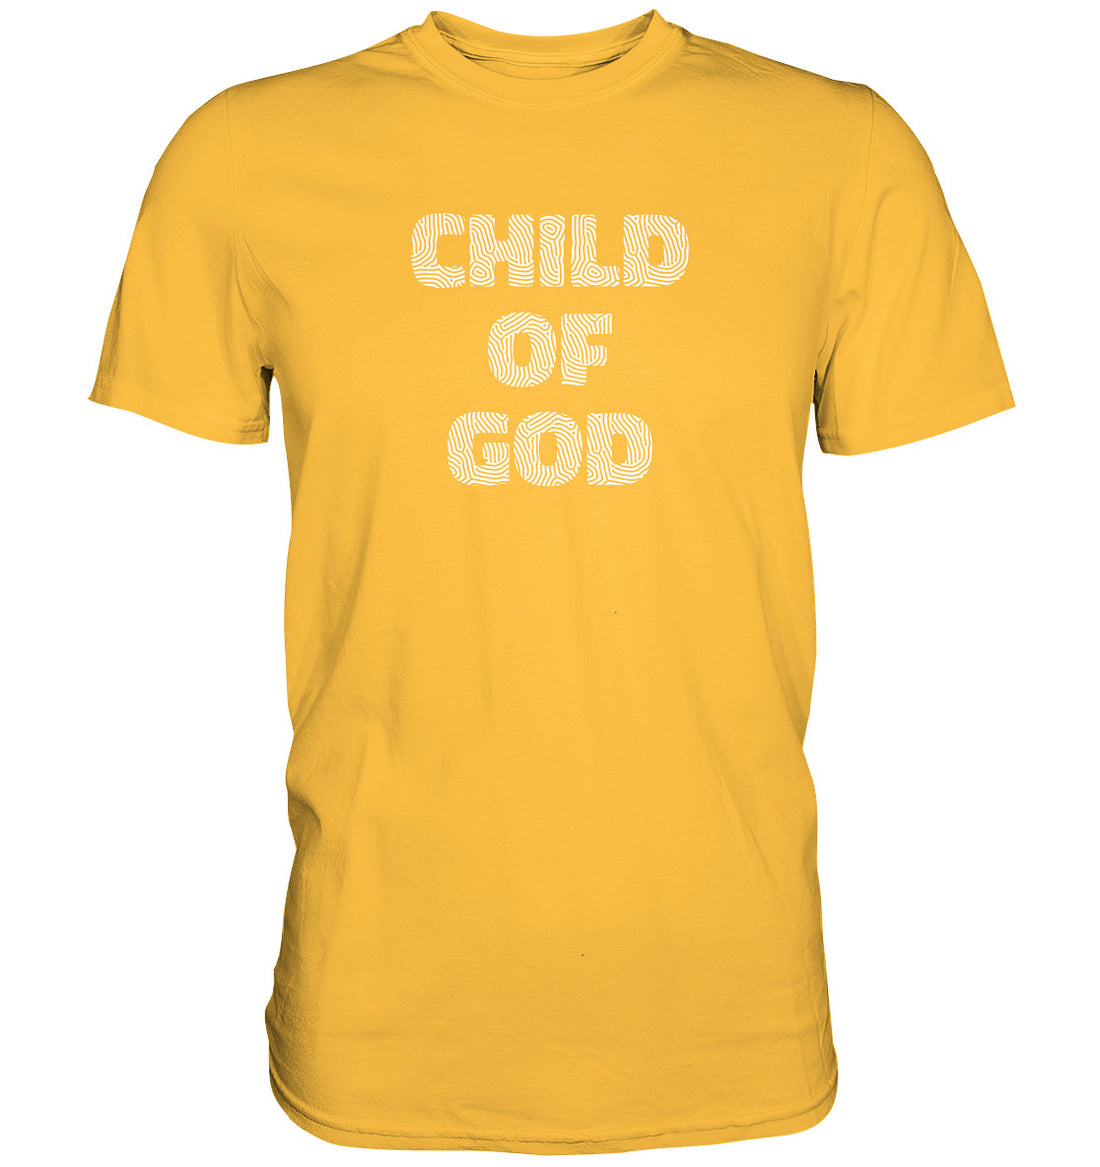 Joh 1,12 - Child of God - Fingerprint Weiß - Premium Shirt